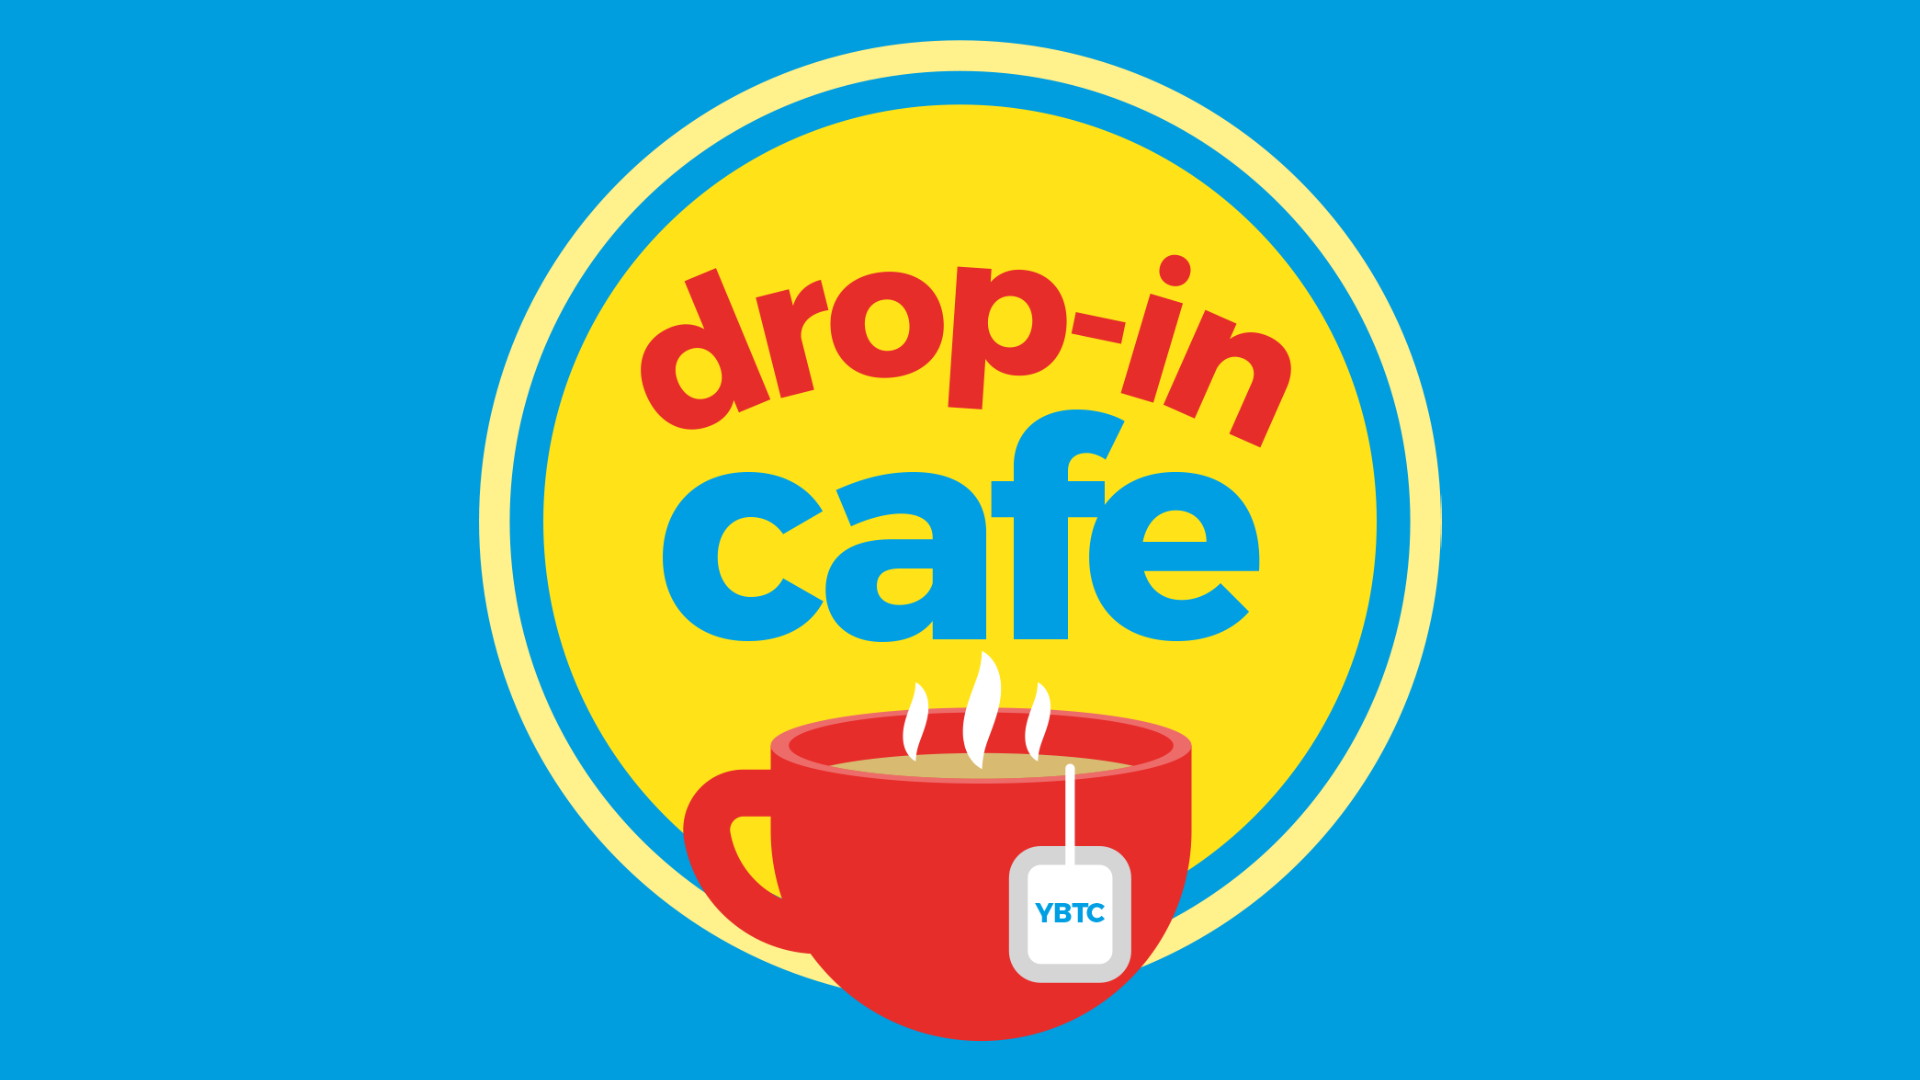 York Drop-in Café